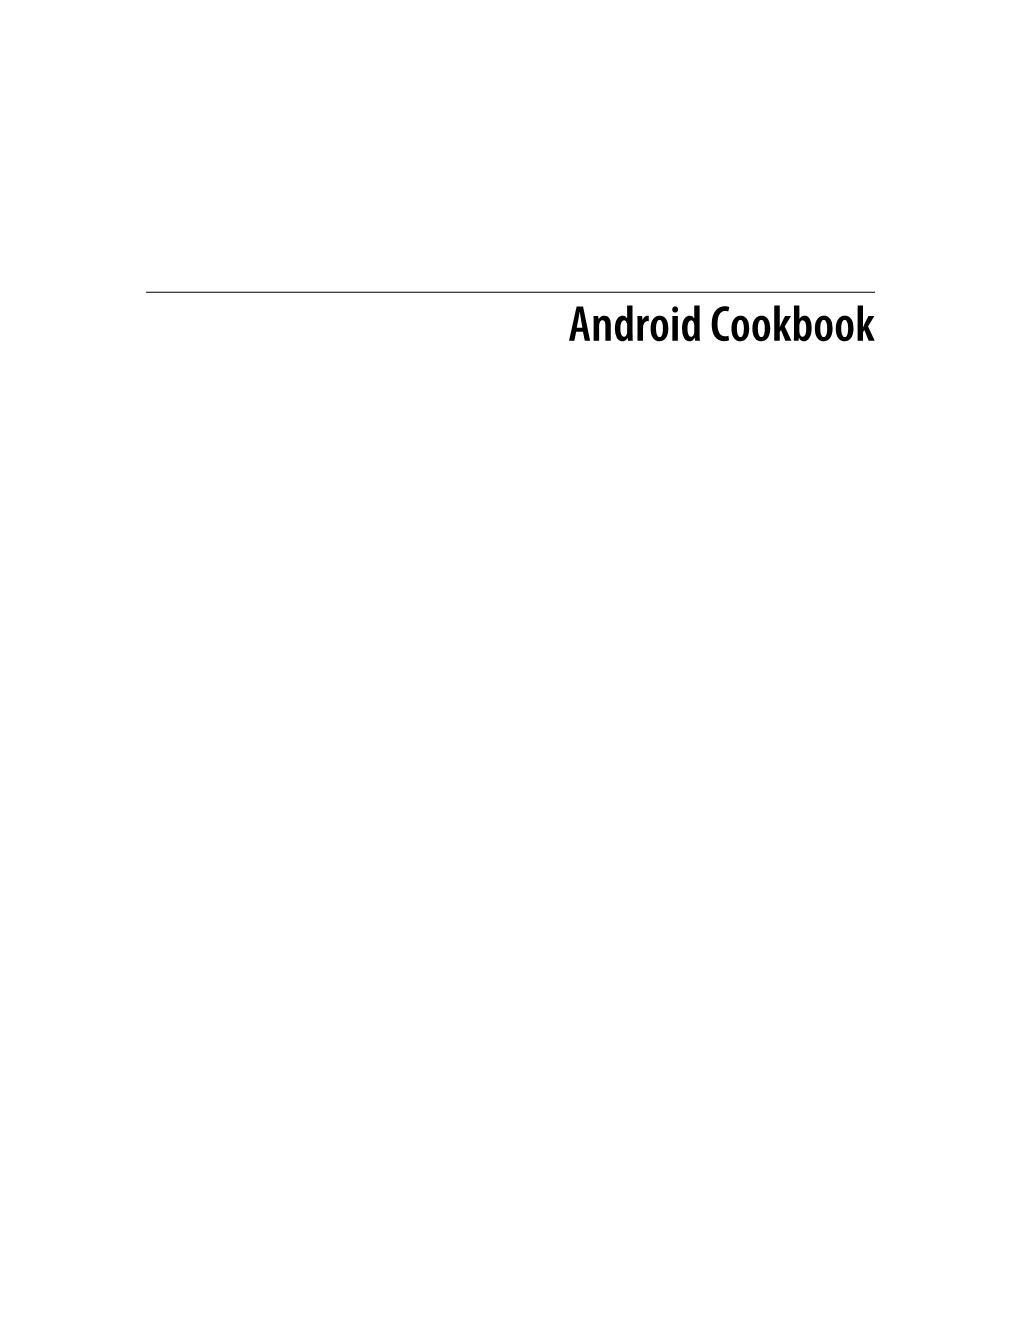 Android Cookbook.Pdf